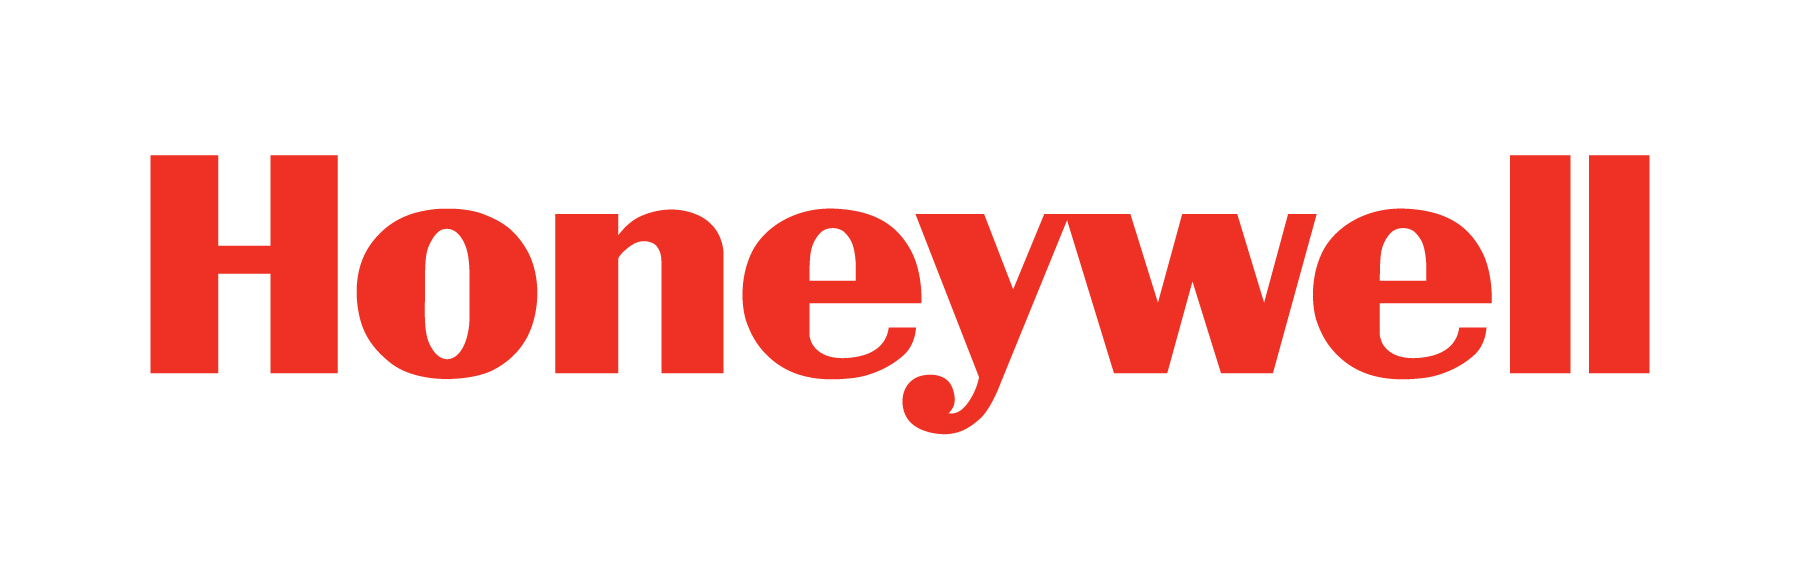 Honeywell Commercial Security Company Logo